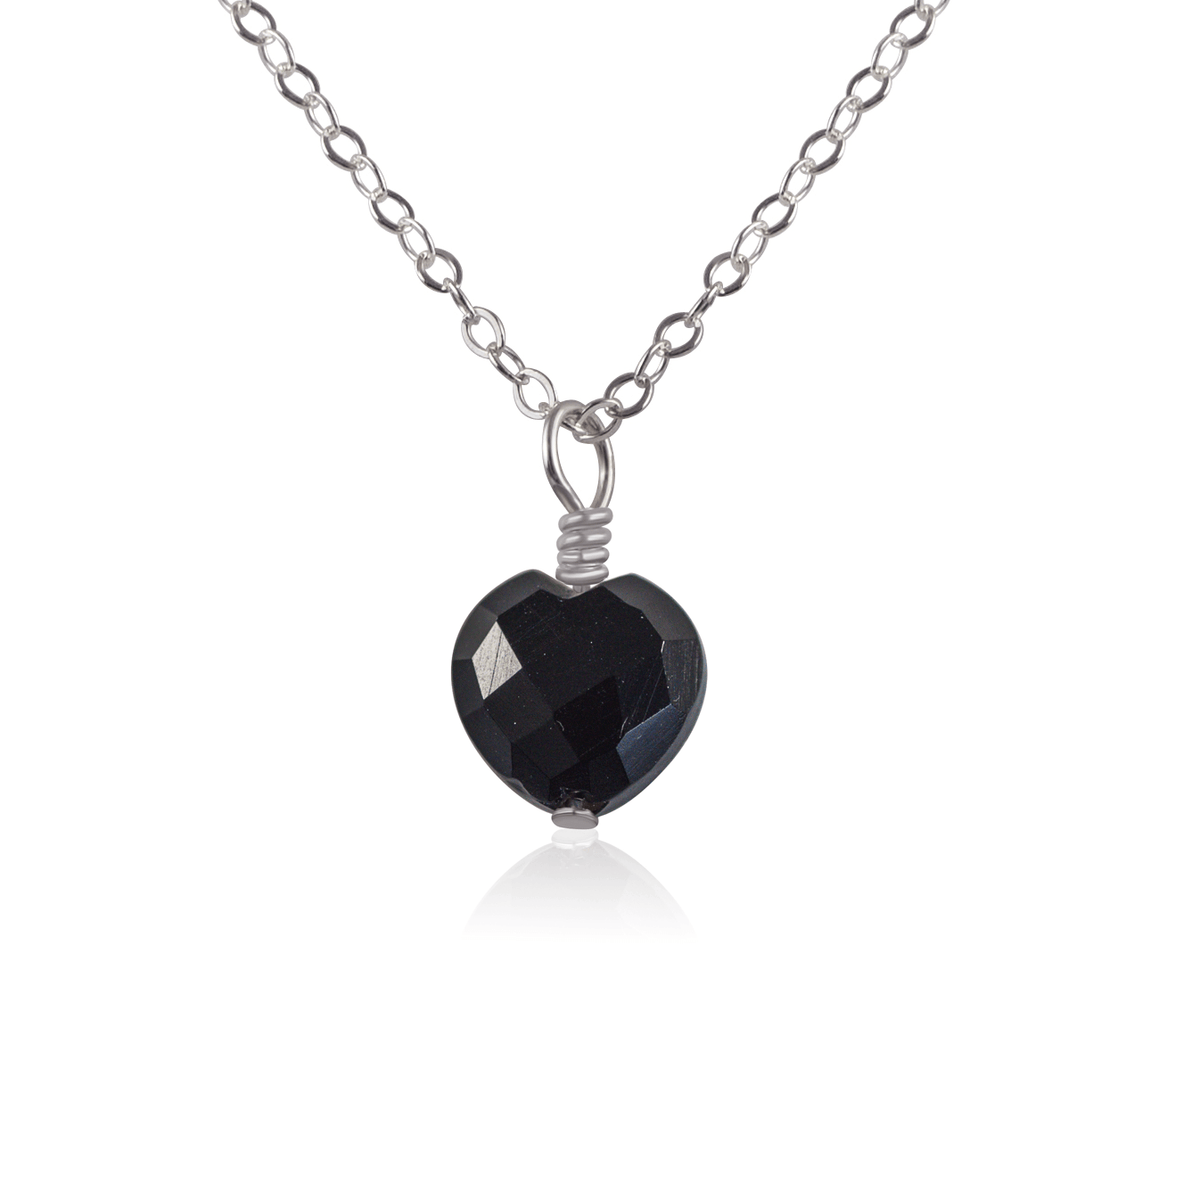 Black Onyx Crystal Heart Pendant Necklace - Black Onyx Crystal Heart Pendant Necklace - Stainless Steel / Cable - Luna Tide Handmade Crystal Jewellery